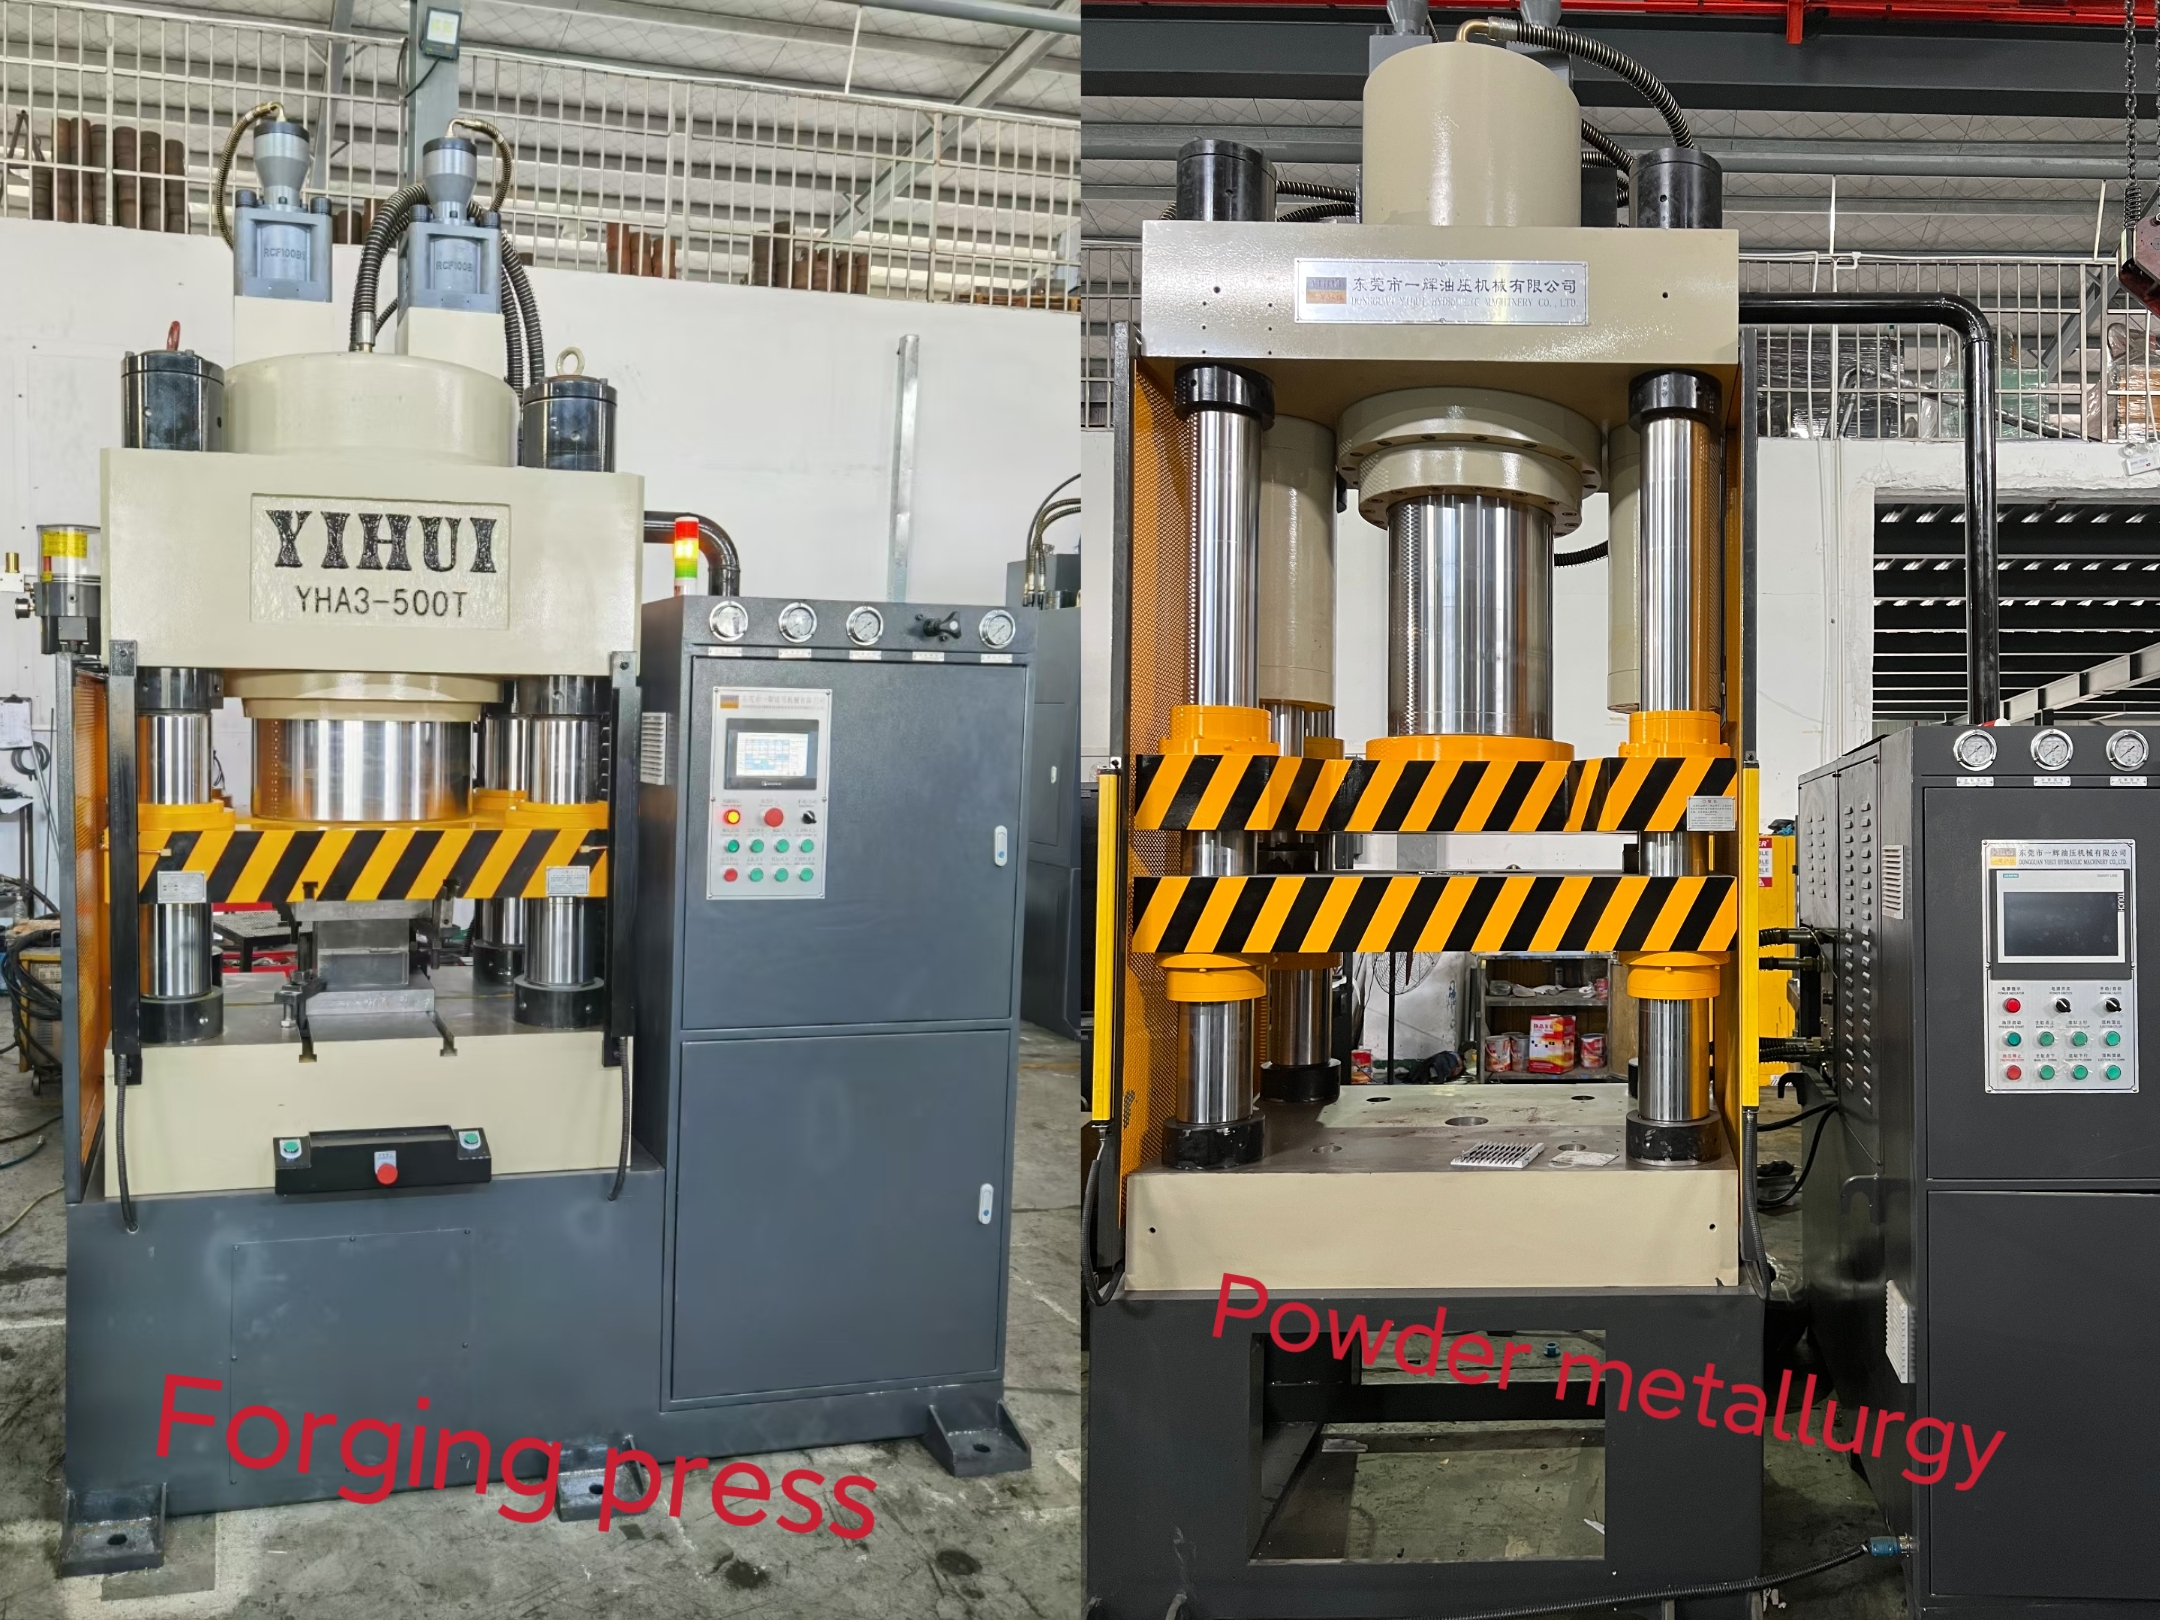 Powder metallurgy press and Forging press